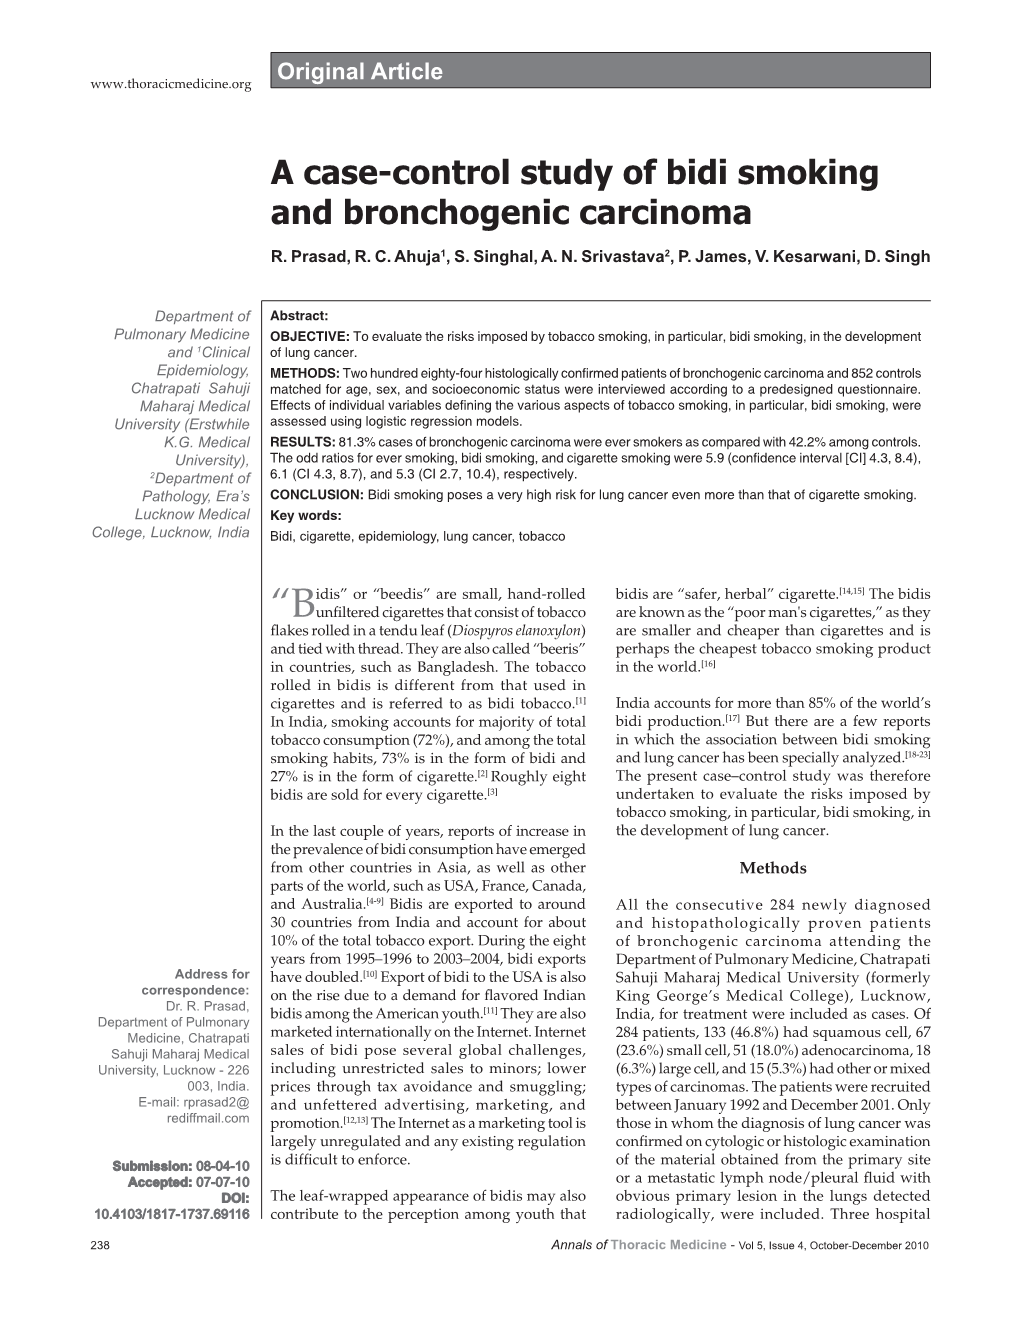 A Case-Control Study of Bidi Smoking and Bronchogenic Carcinoma